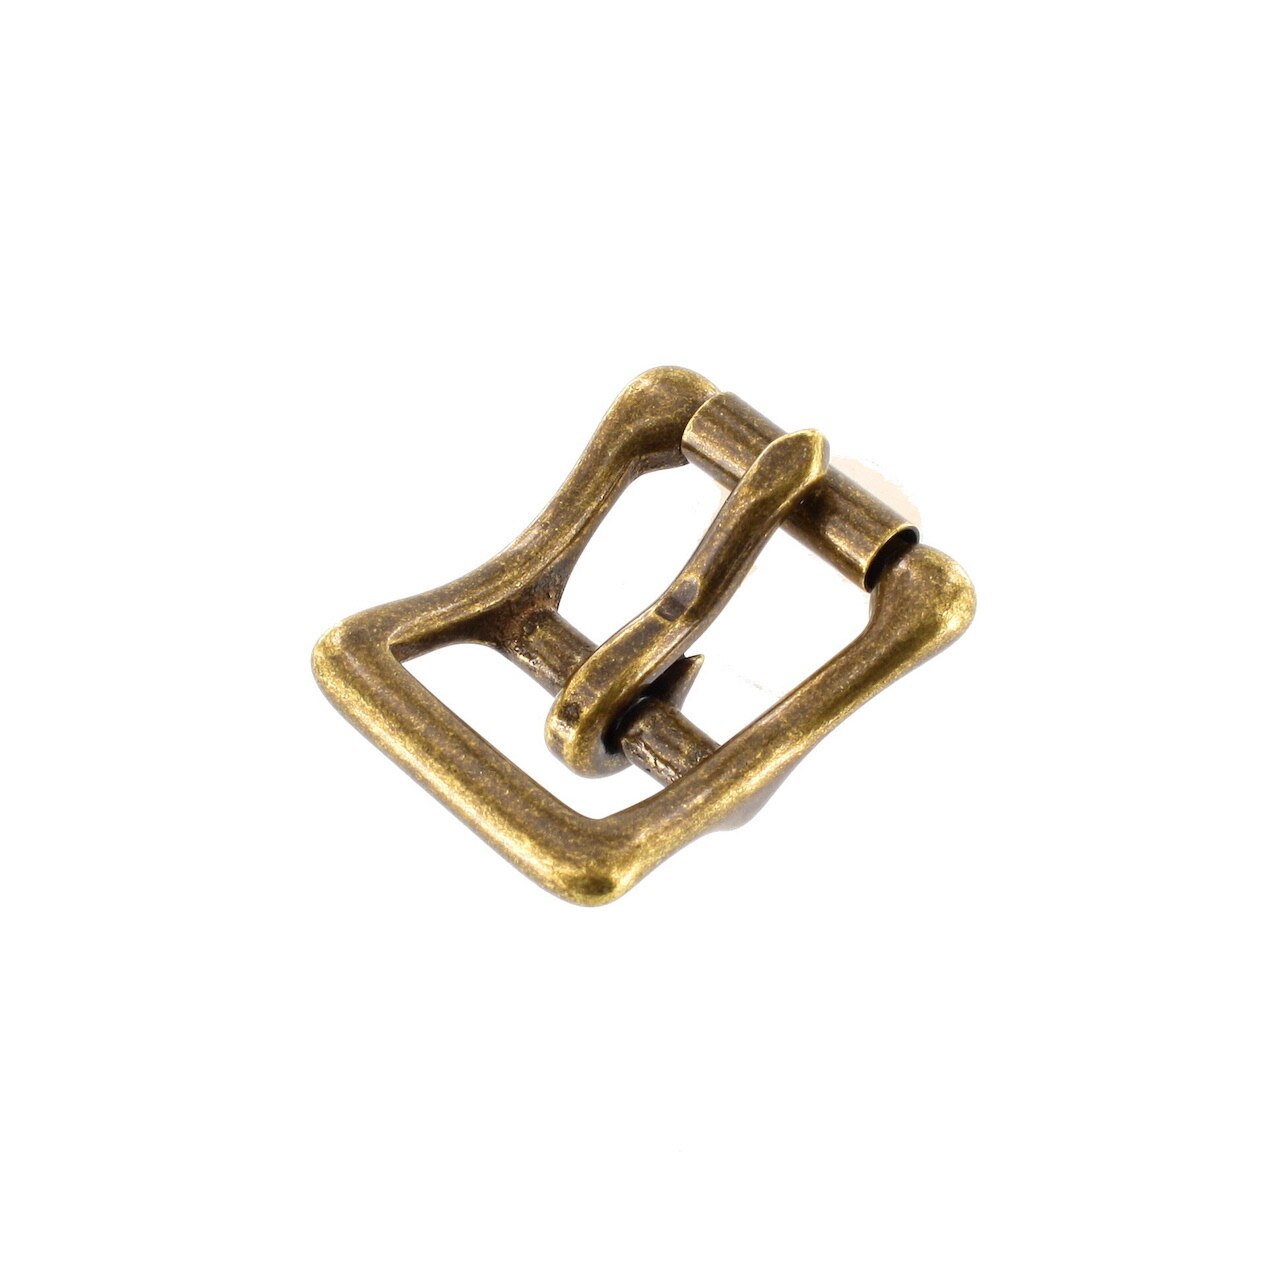 Brass Middle Bar Roller Buckle Bridle Halter Harness Leather Strap 5/8" 3/4" 1" 